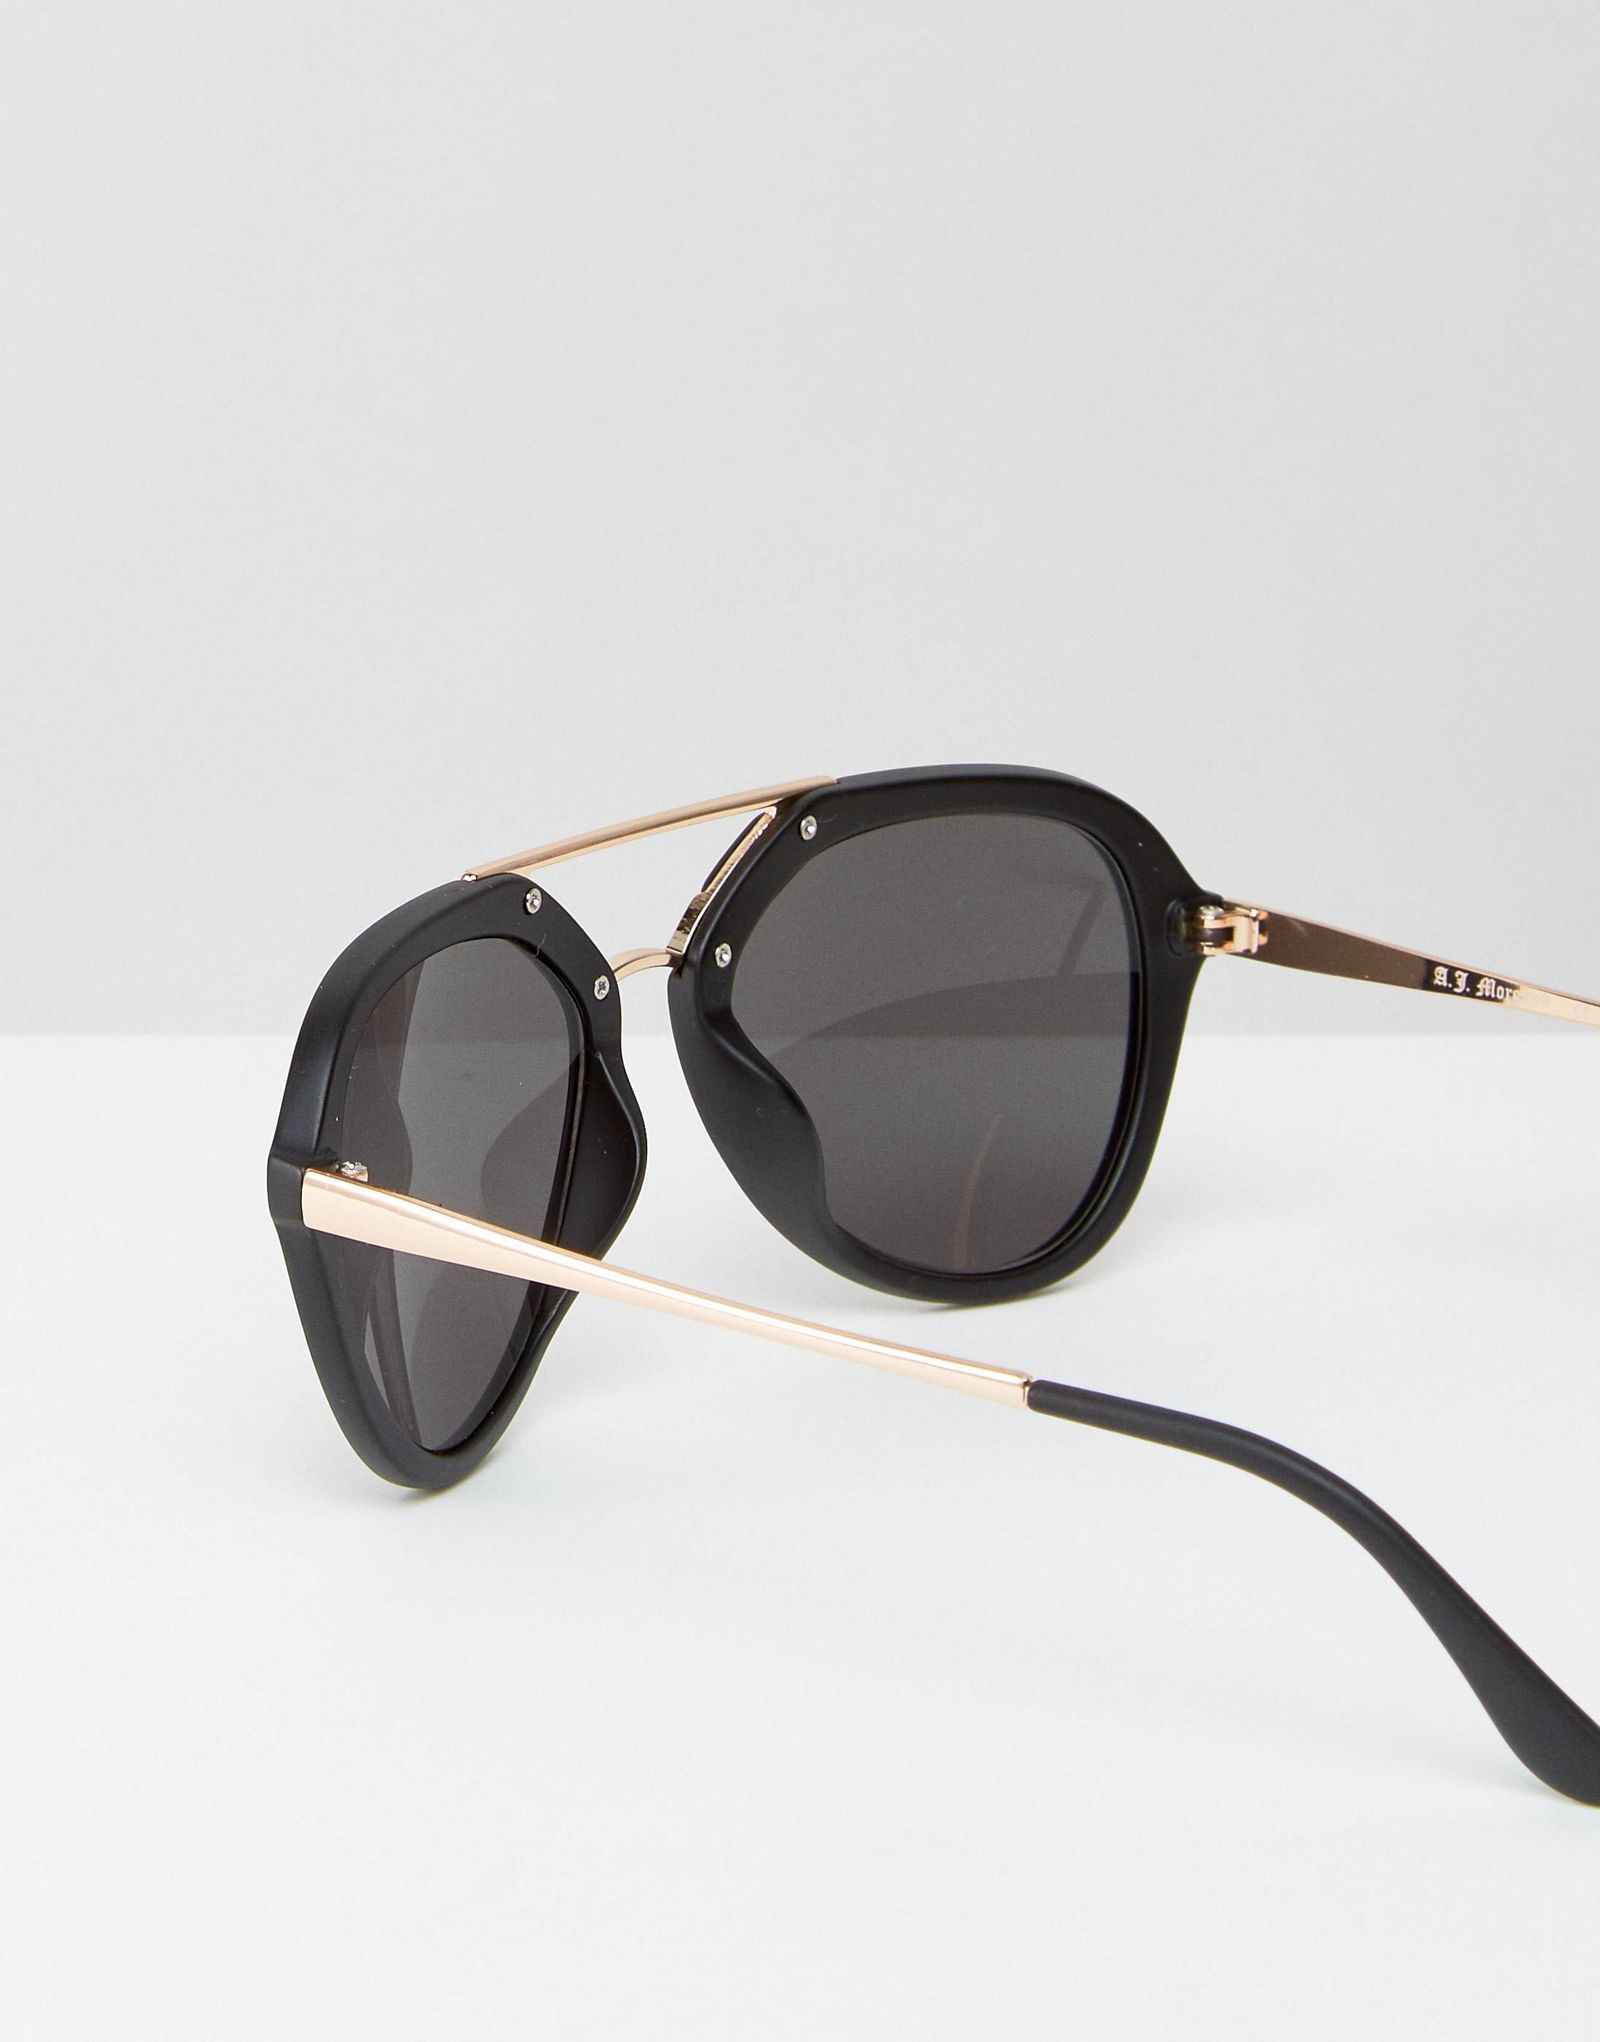 A J Morgan Aviator Sunglasses in Matt Black and Contrast Gold